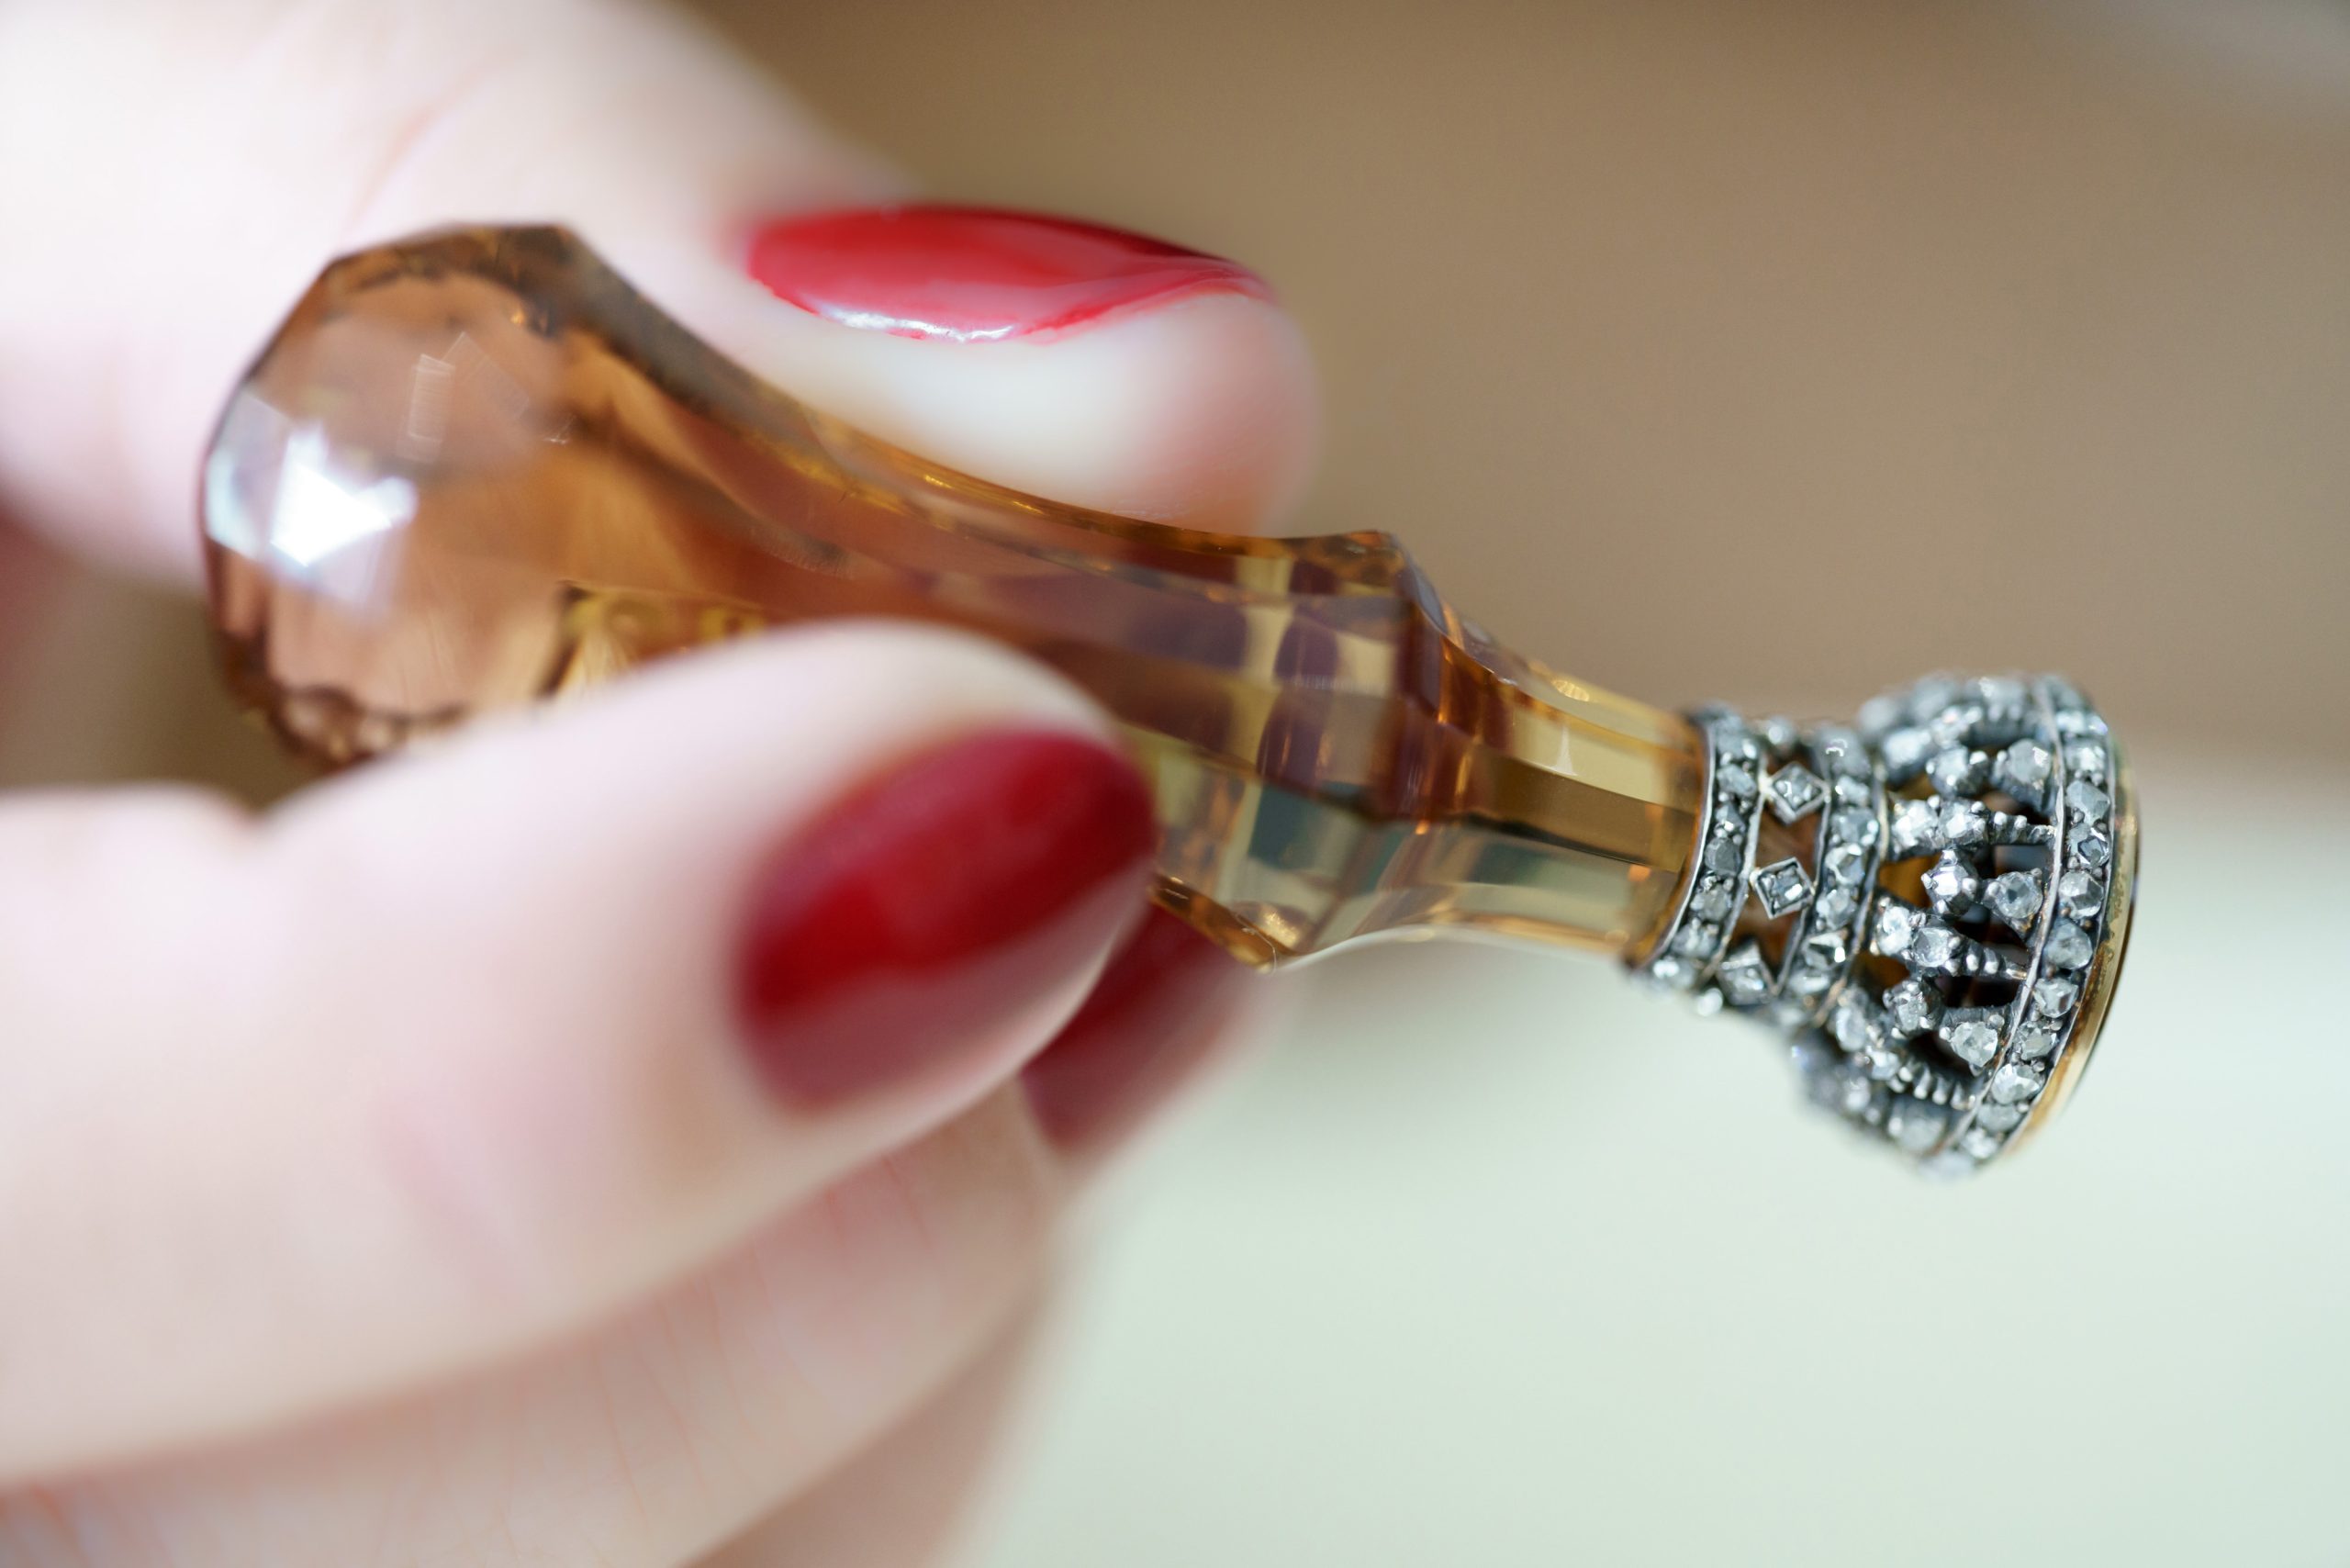 10 Stunning Wedding Nails For Brides - Wondafox | Bride nails, Bridal nails  designs, Wedding nails